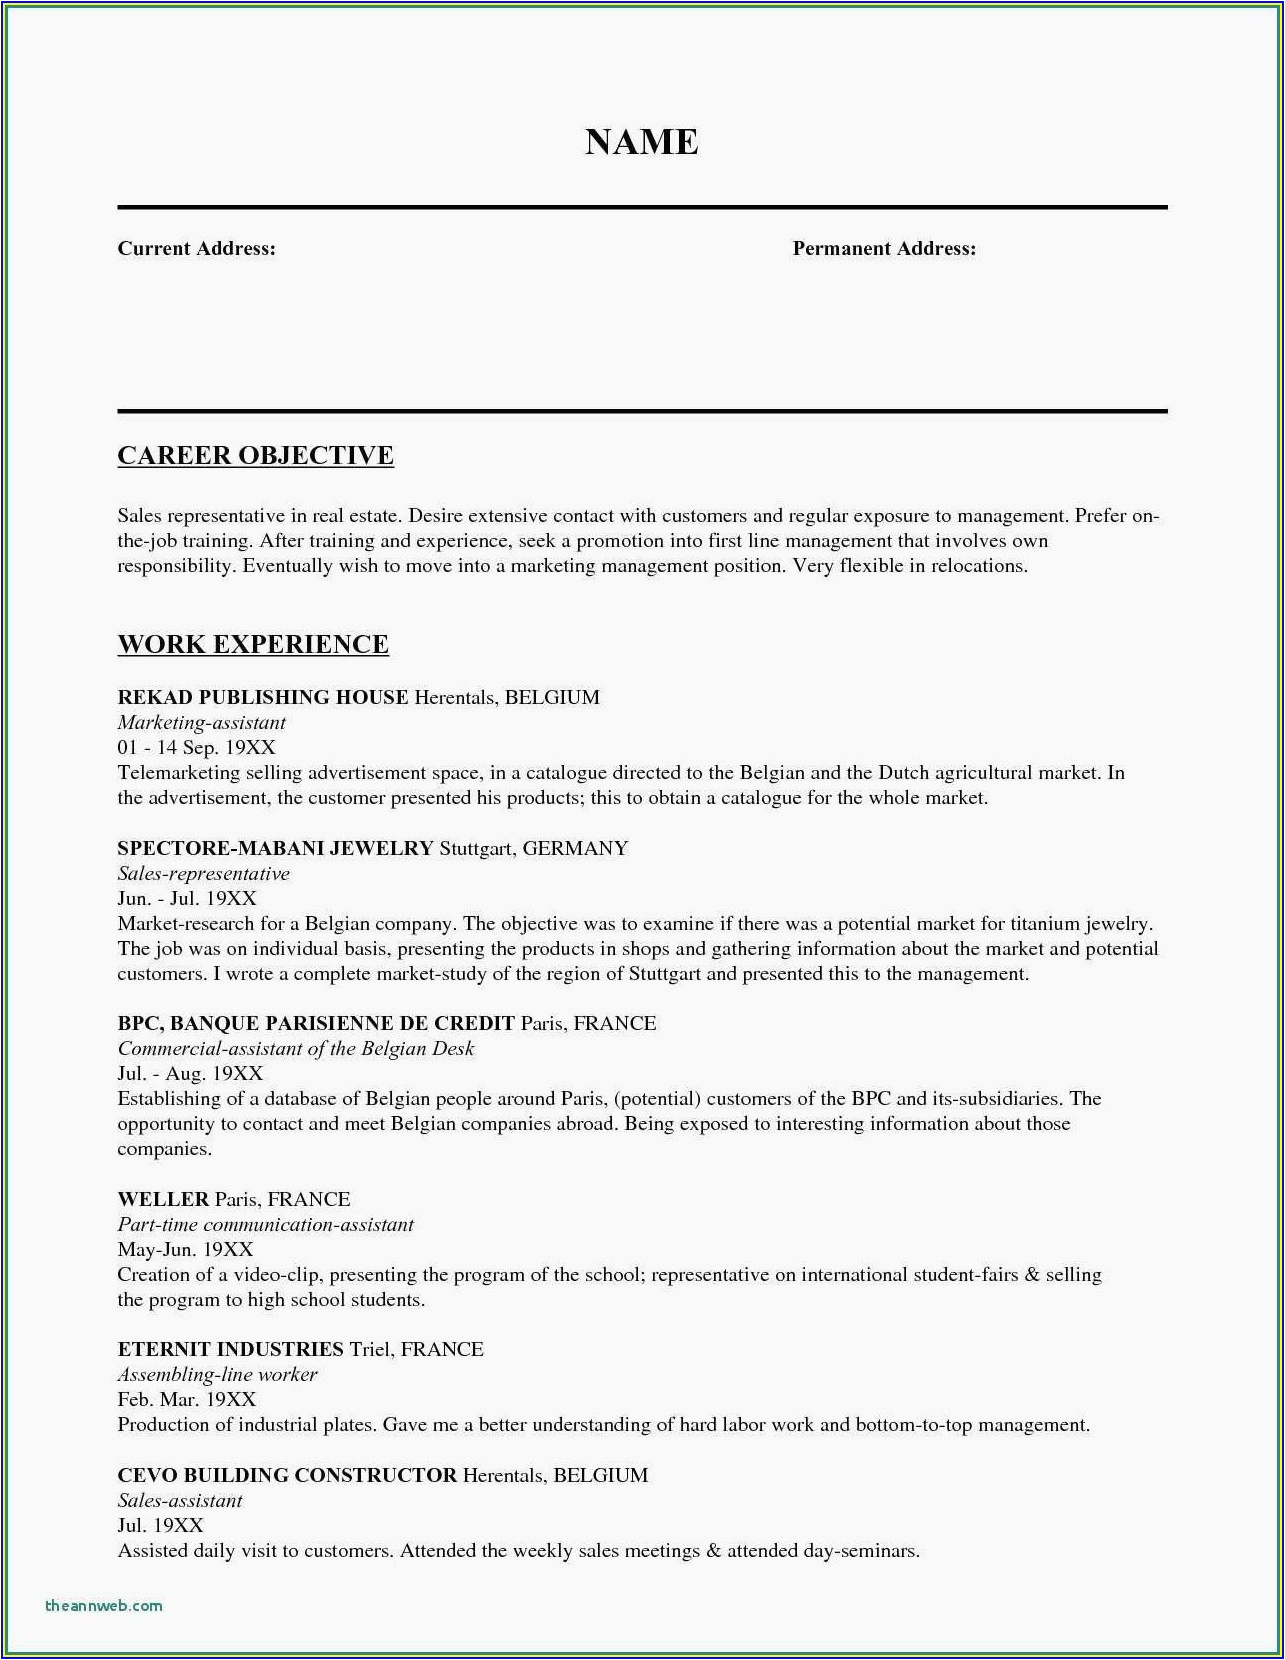 Sample Resume for Filipino Nurses Applying Abroad Sample Curriculum Vitae for Nurses Applying Abroad